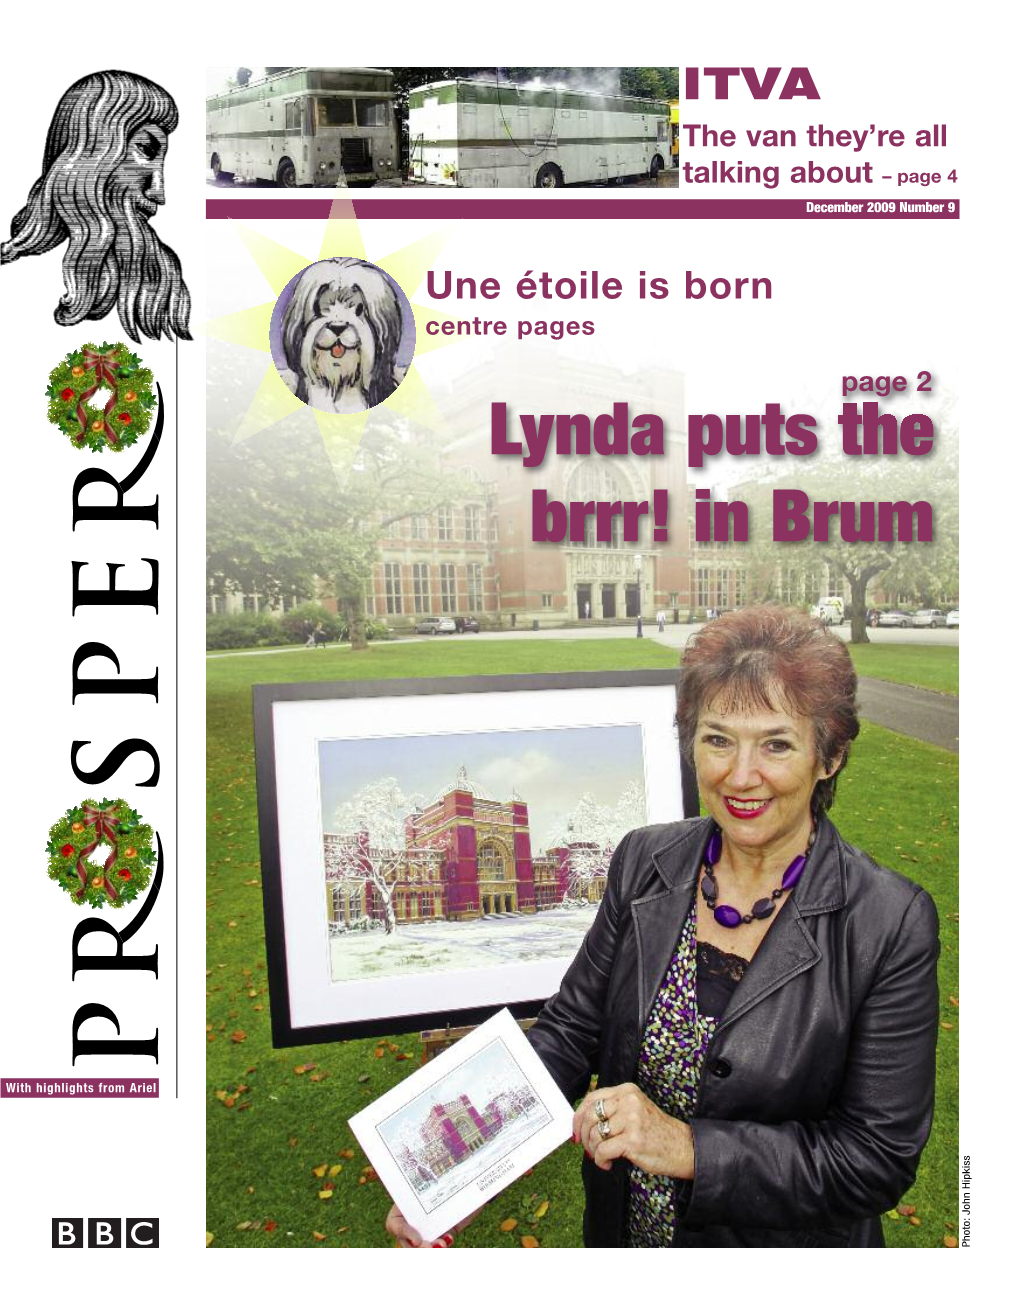 Lynda Puts the Brrr! in Brum